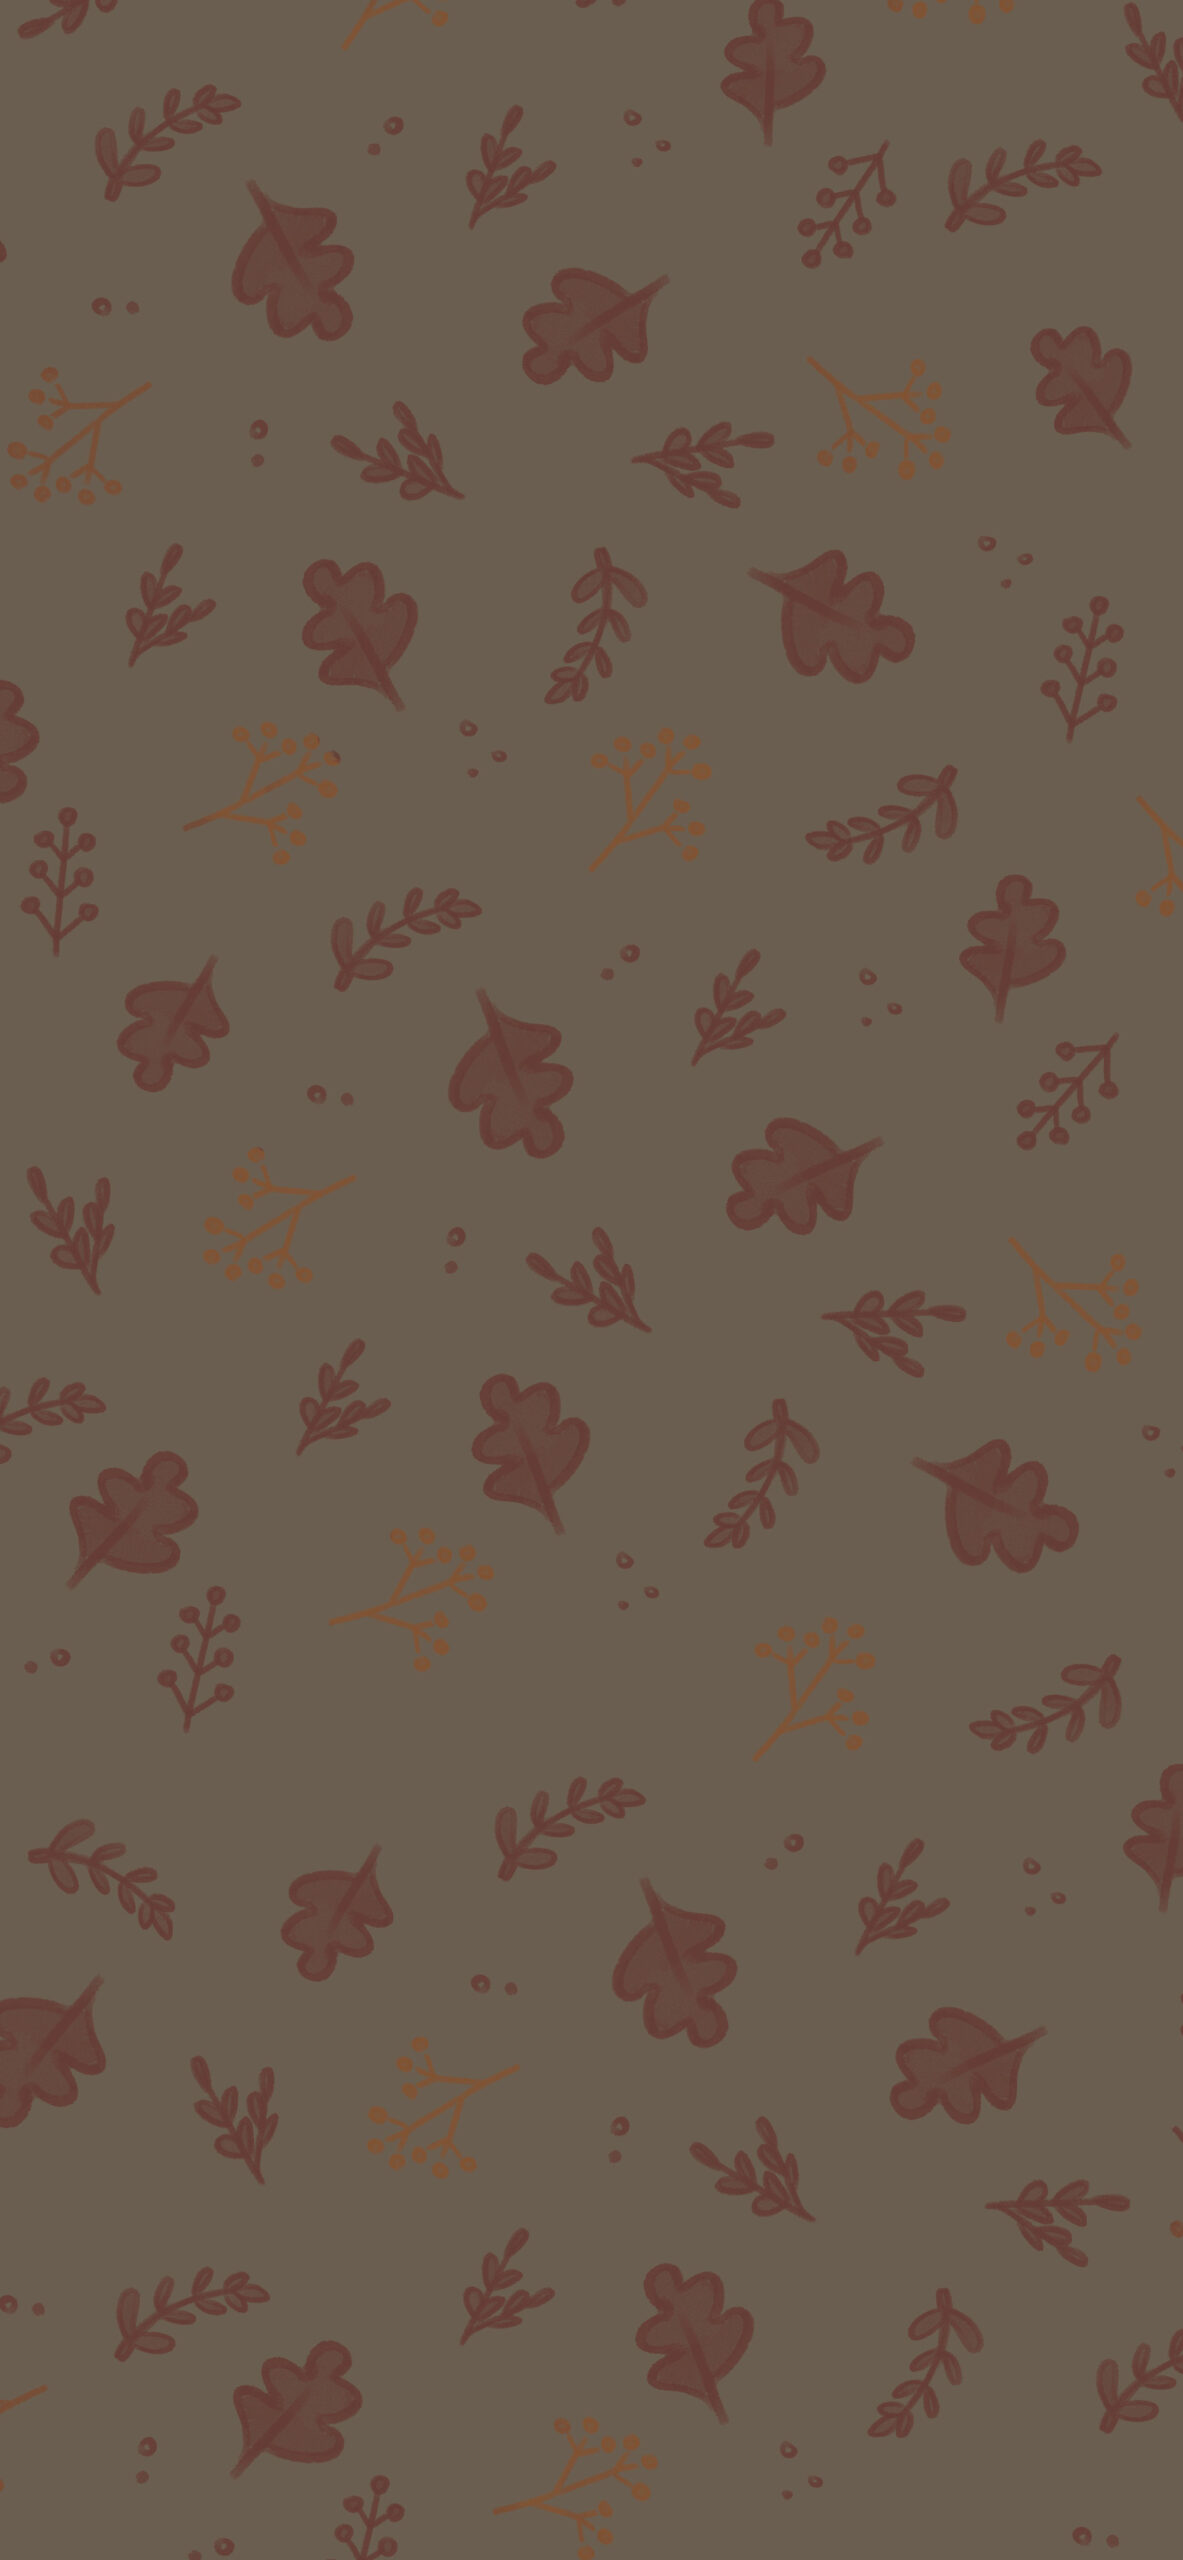 oak leaves brown background